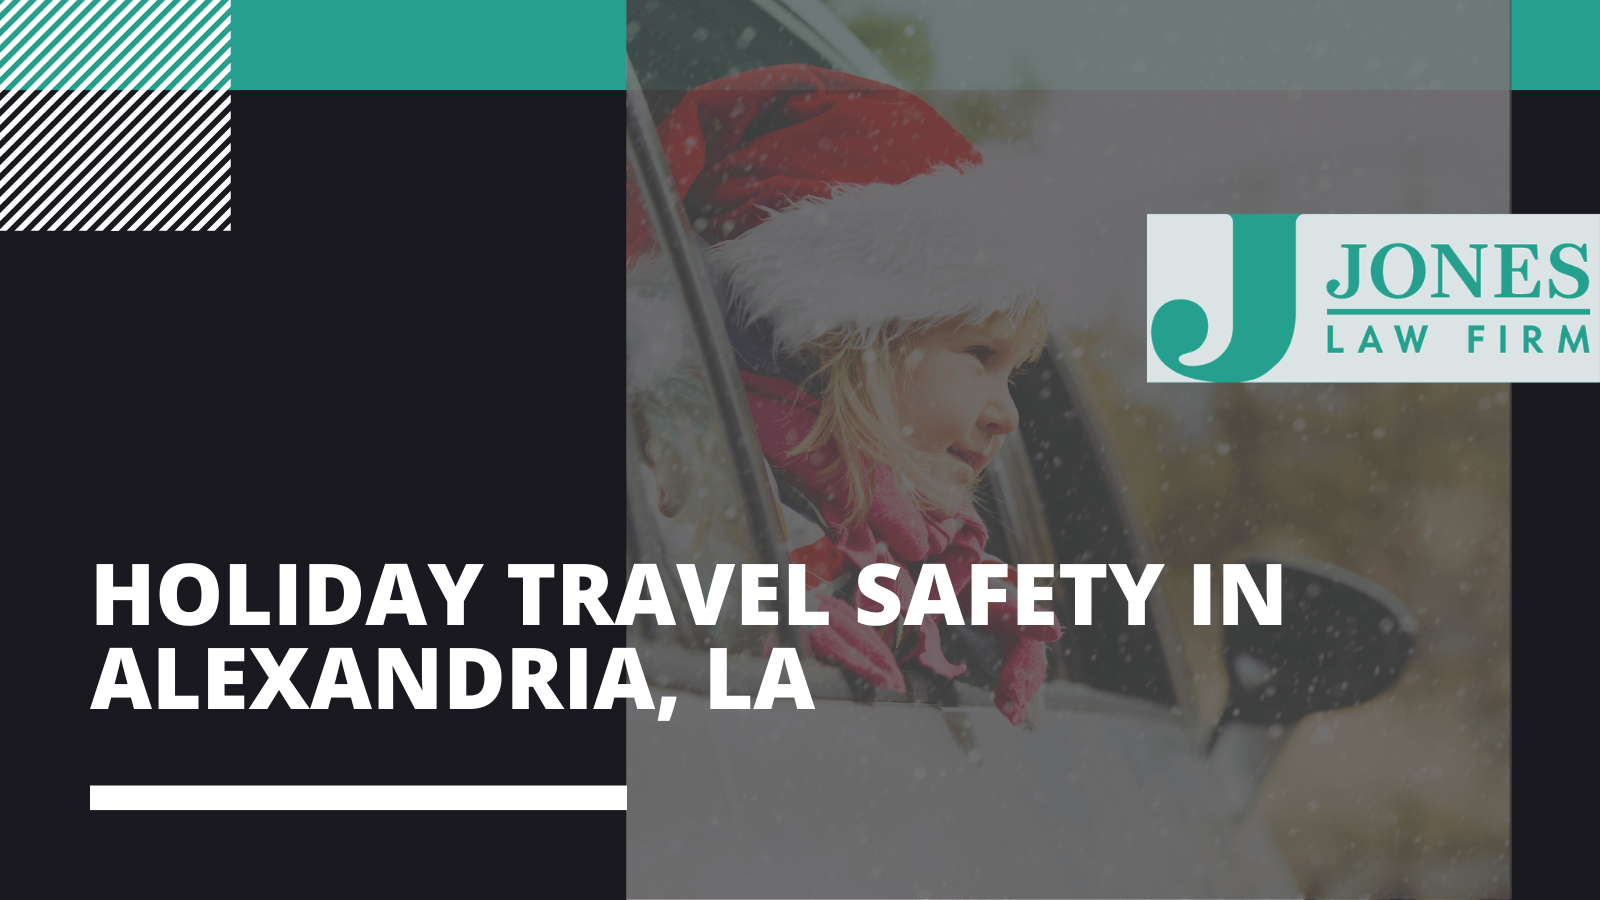 Holiday Travel Safety in Alexandria, LA - Jones law firm - Alexandria louisiana